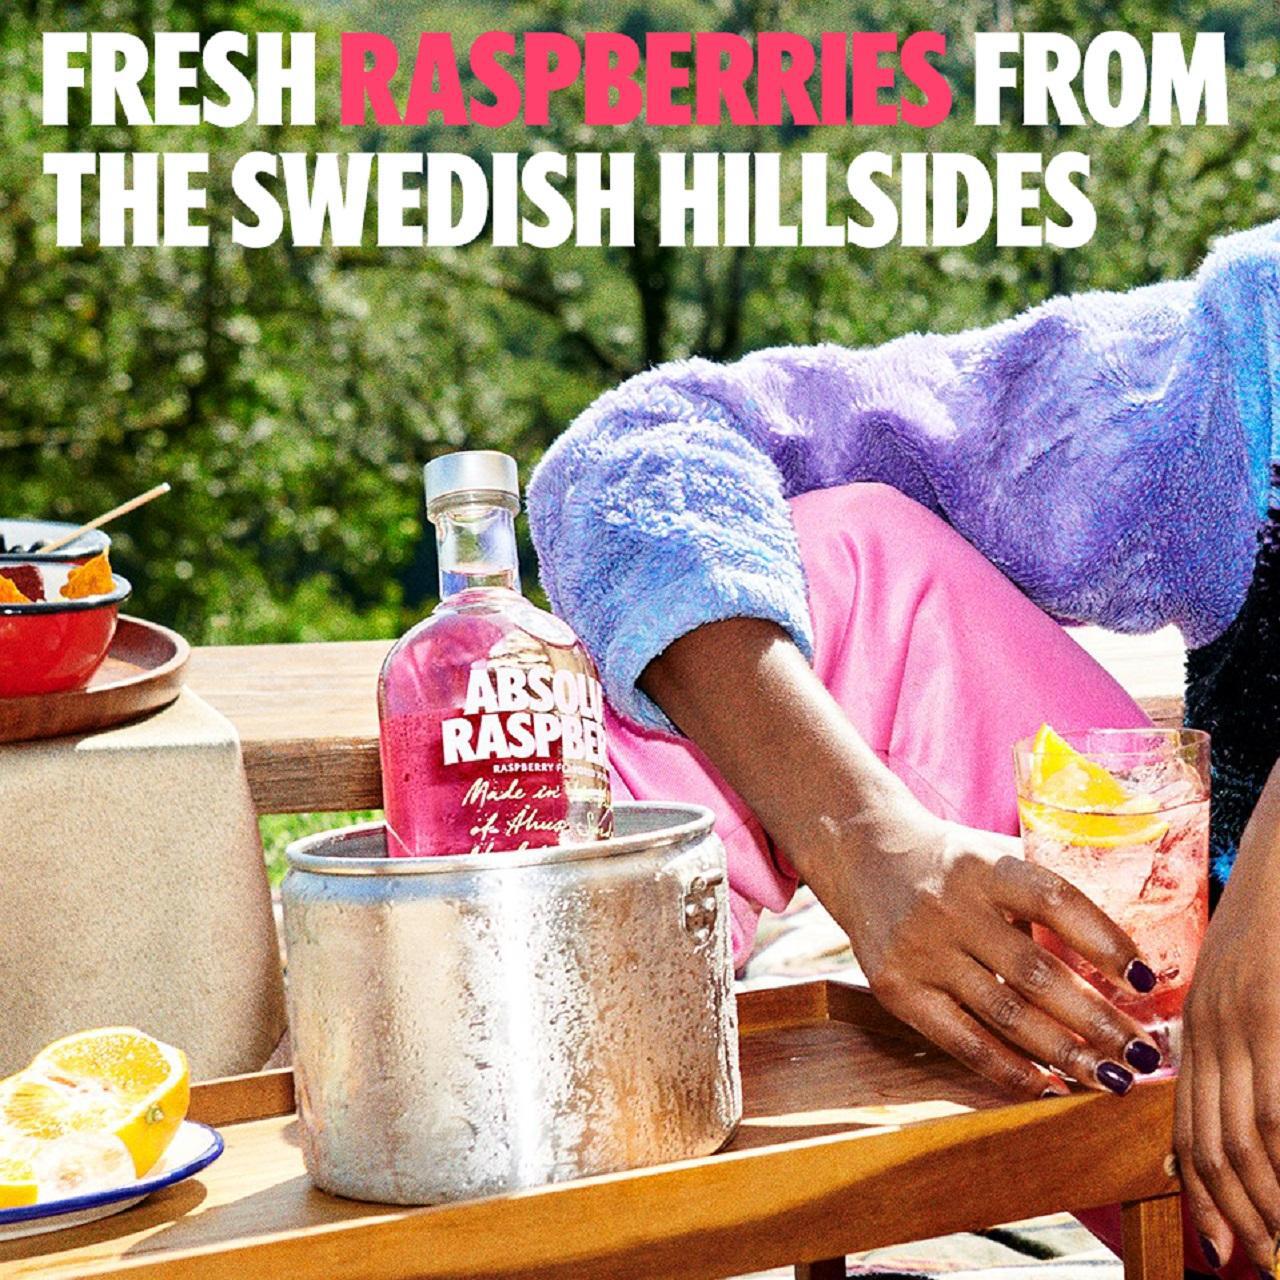 Absolut Raspberri Raspberry Flavoured Swedish Vodka 70cl